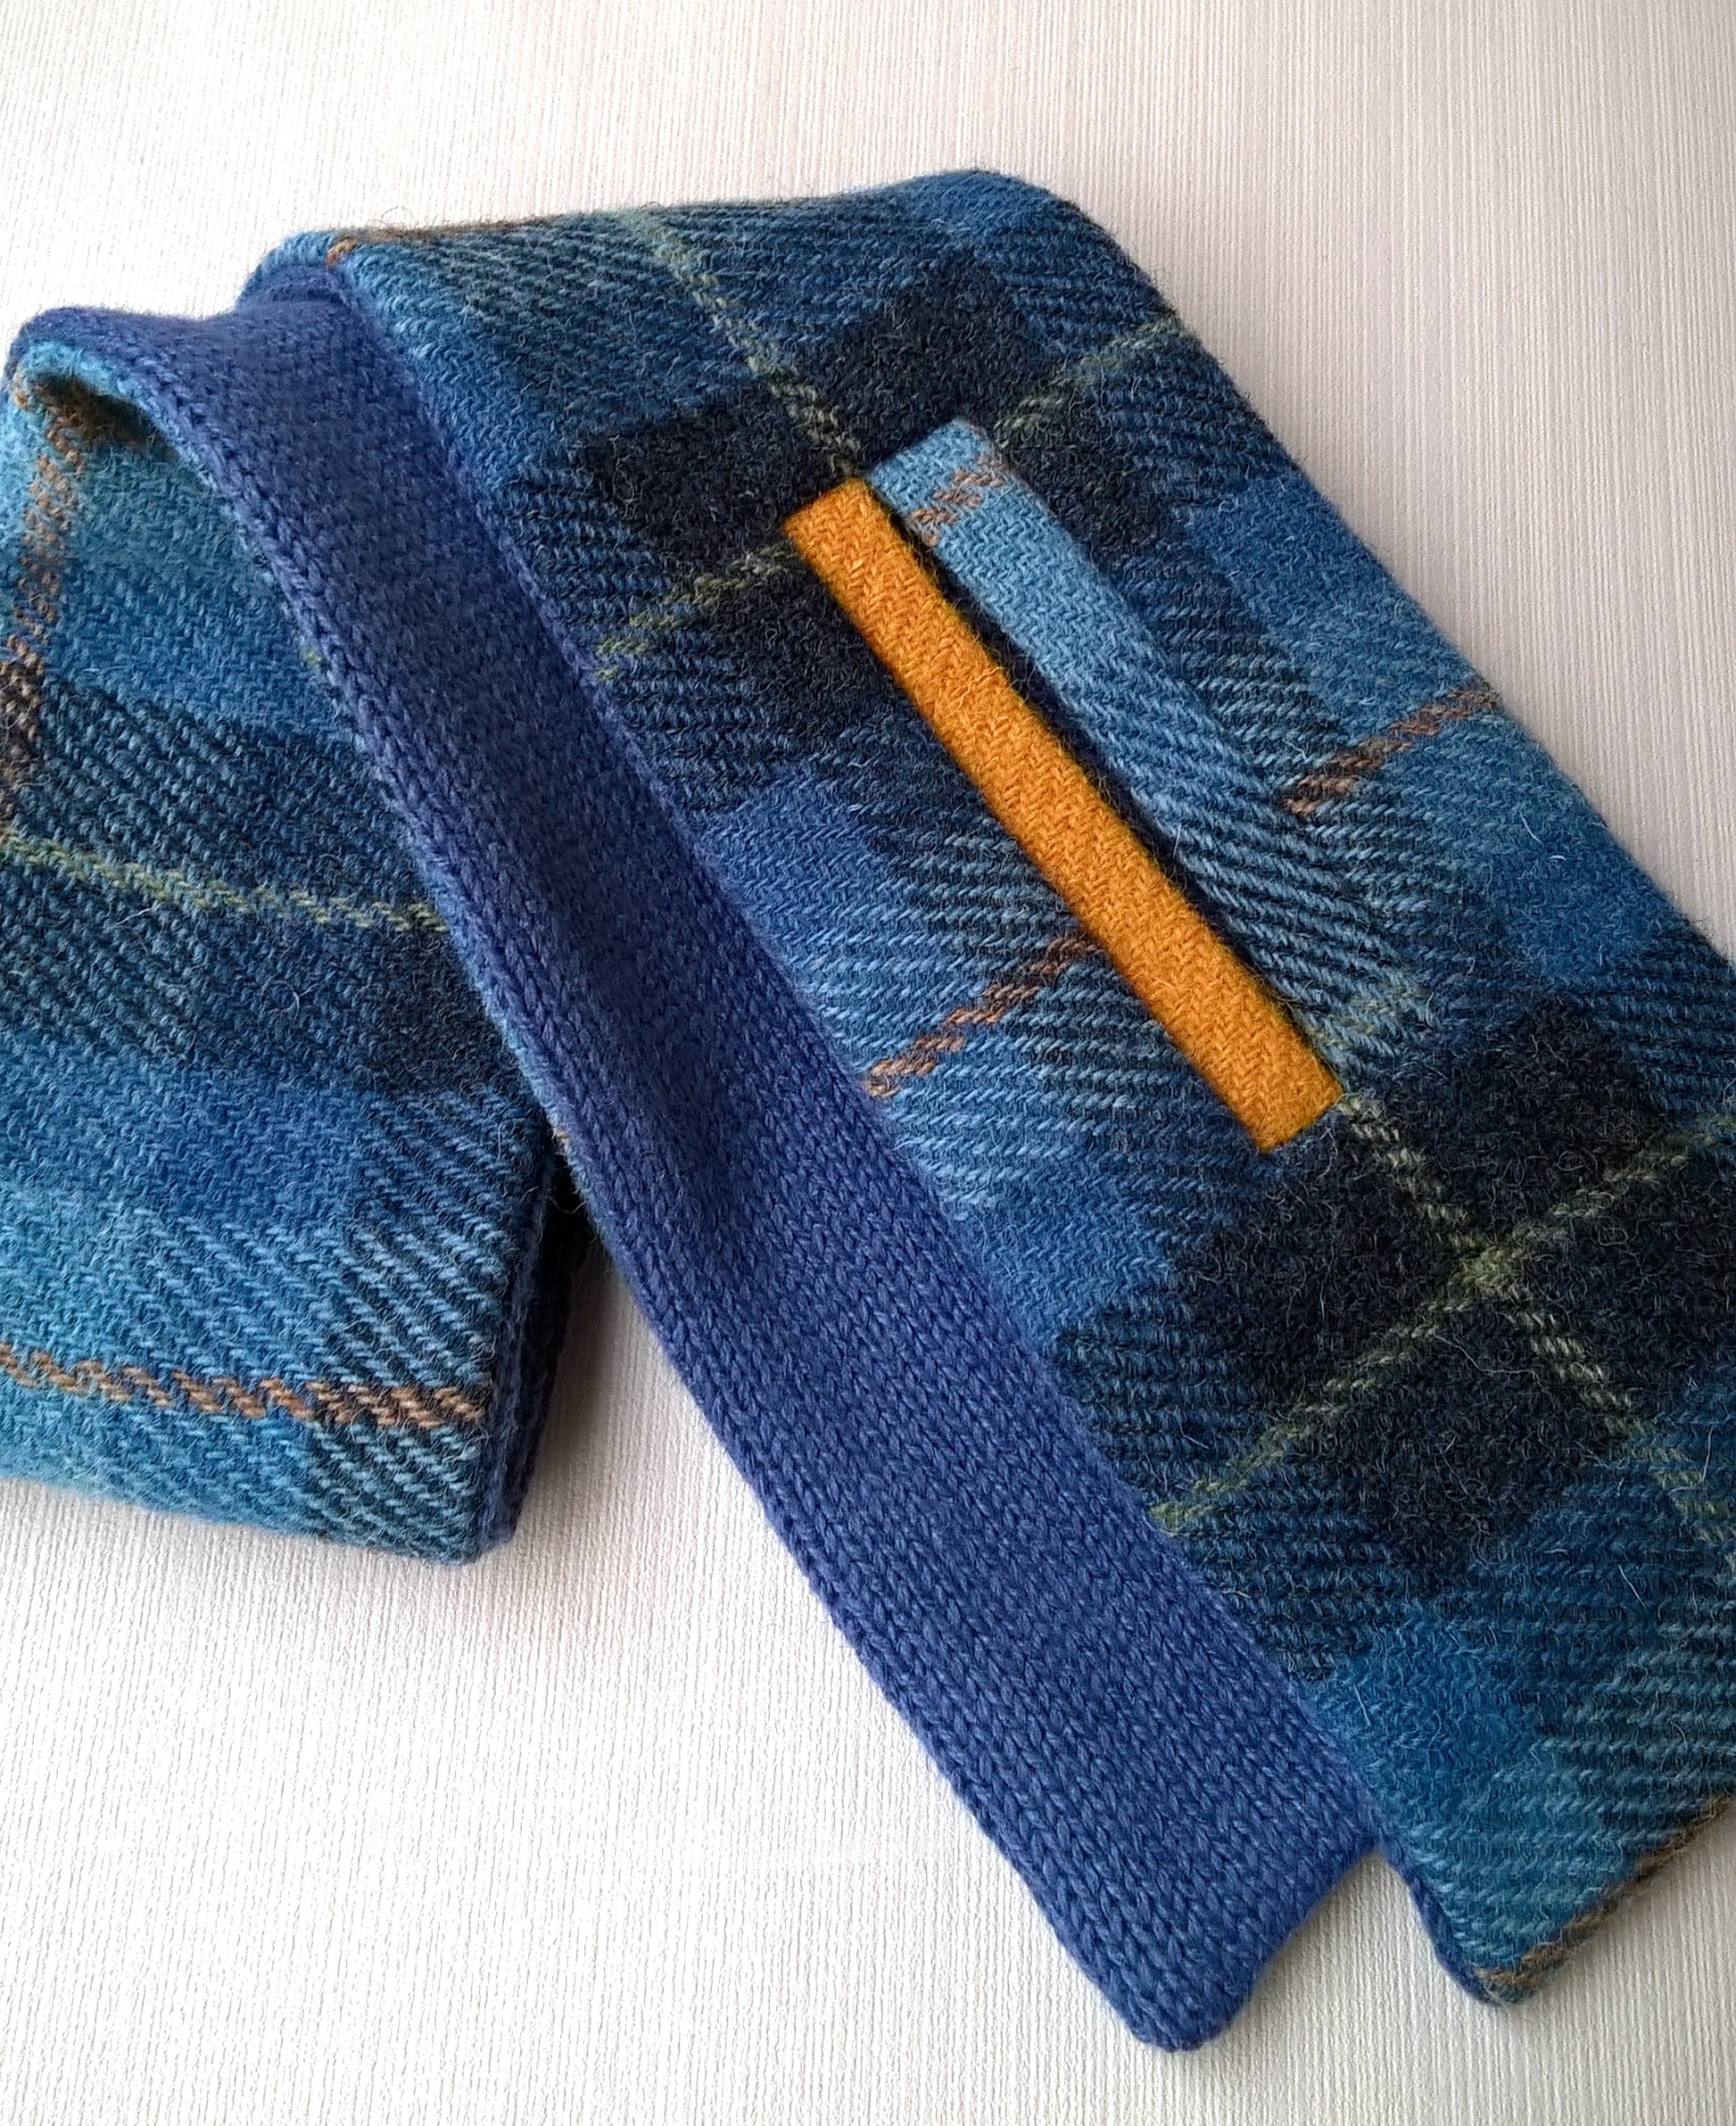 Harris Tweed wool scarf in blues with yellow